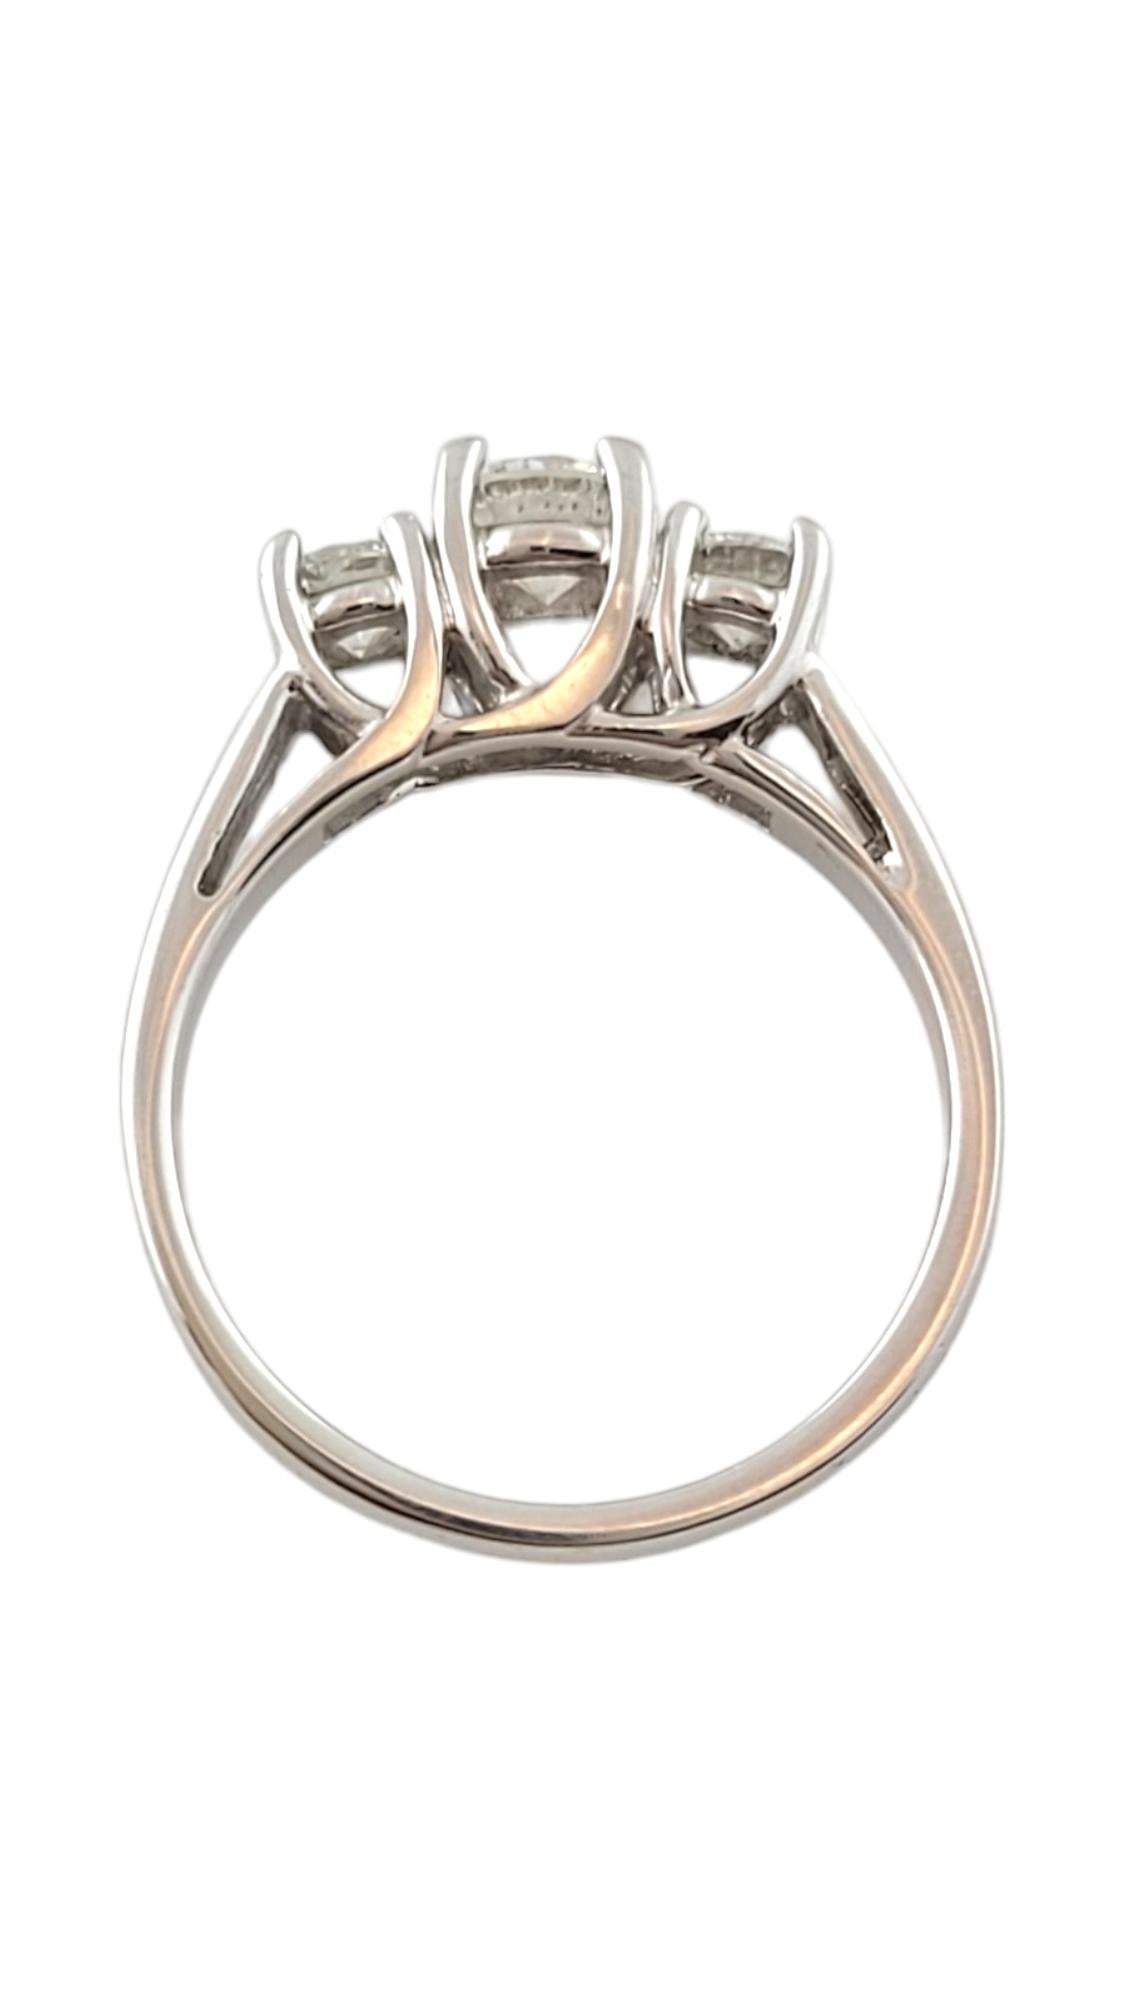 Brilliant Cut 14K White Gold Past, Present and Future Diamond Ring Size 6.75 #16984 For Sale